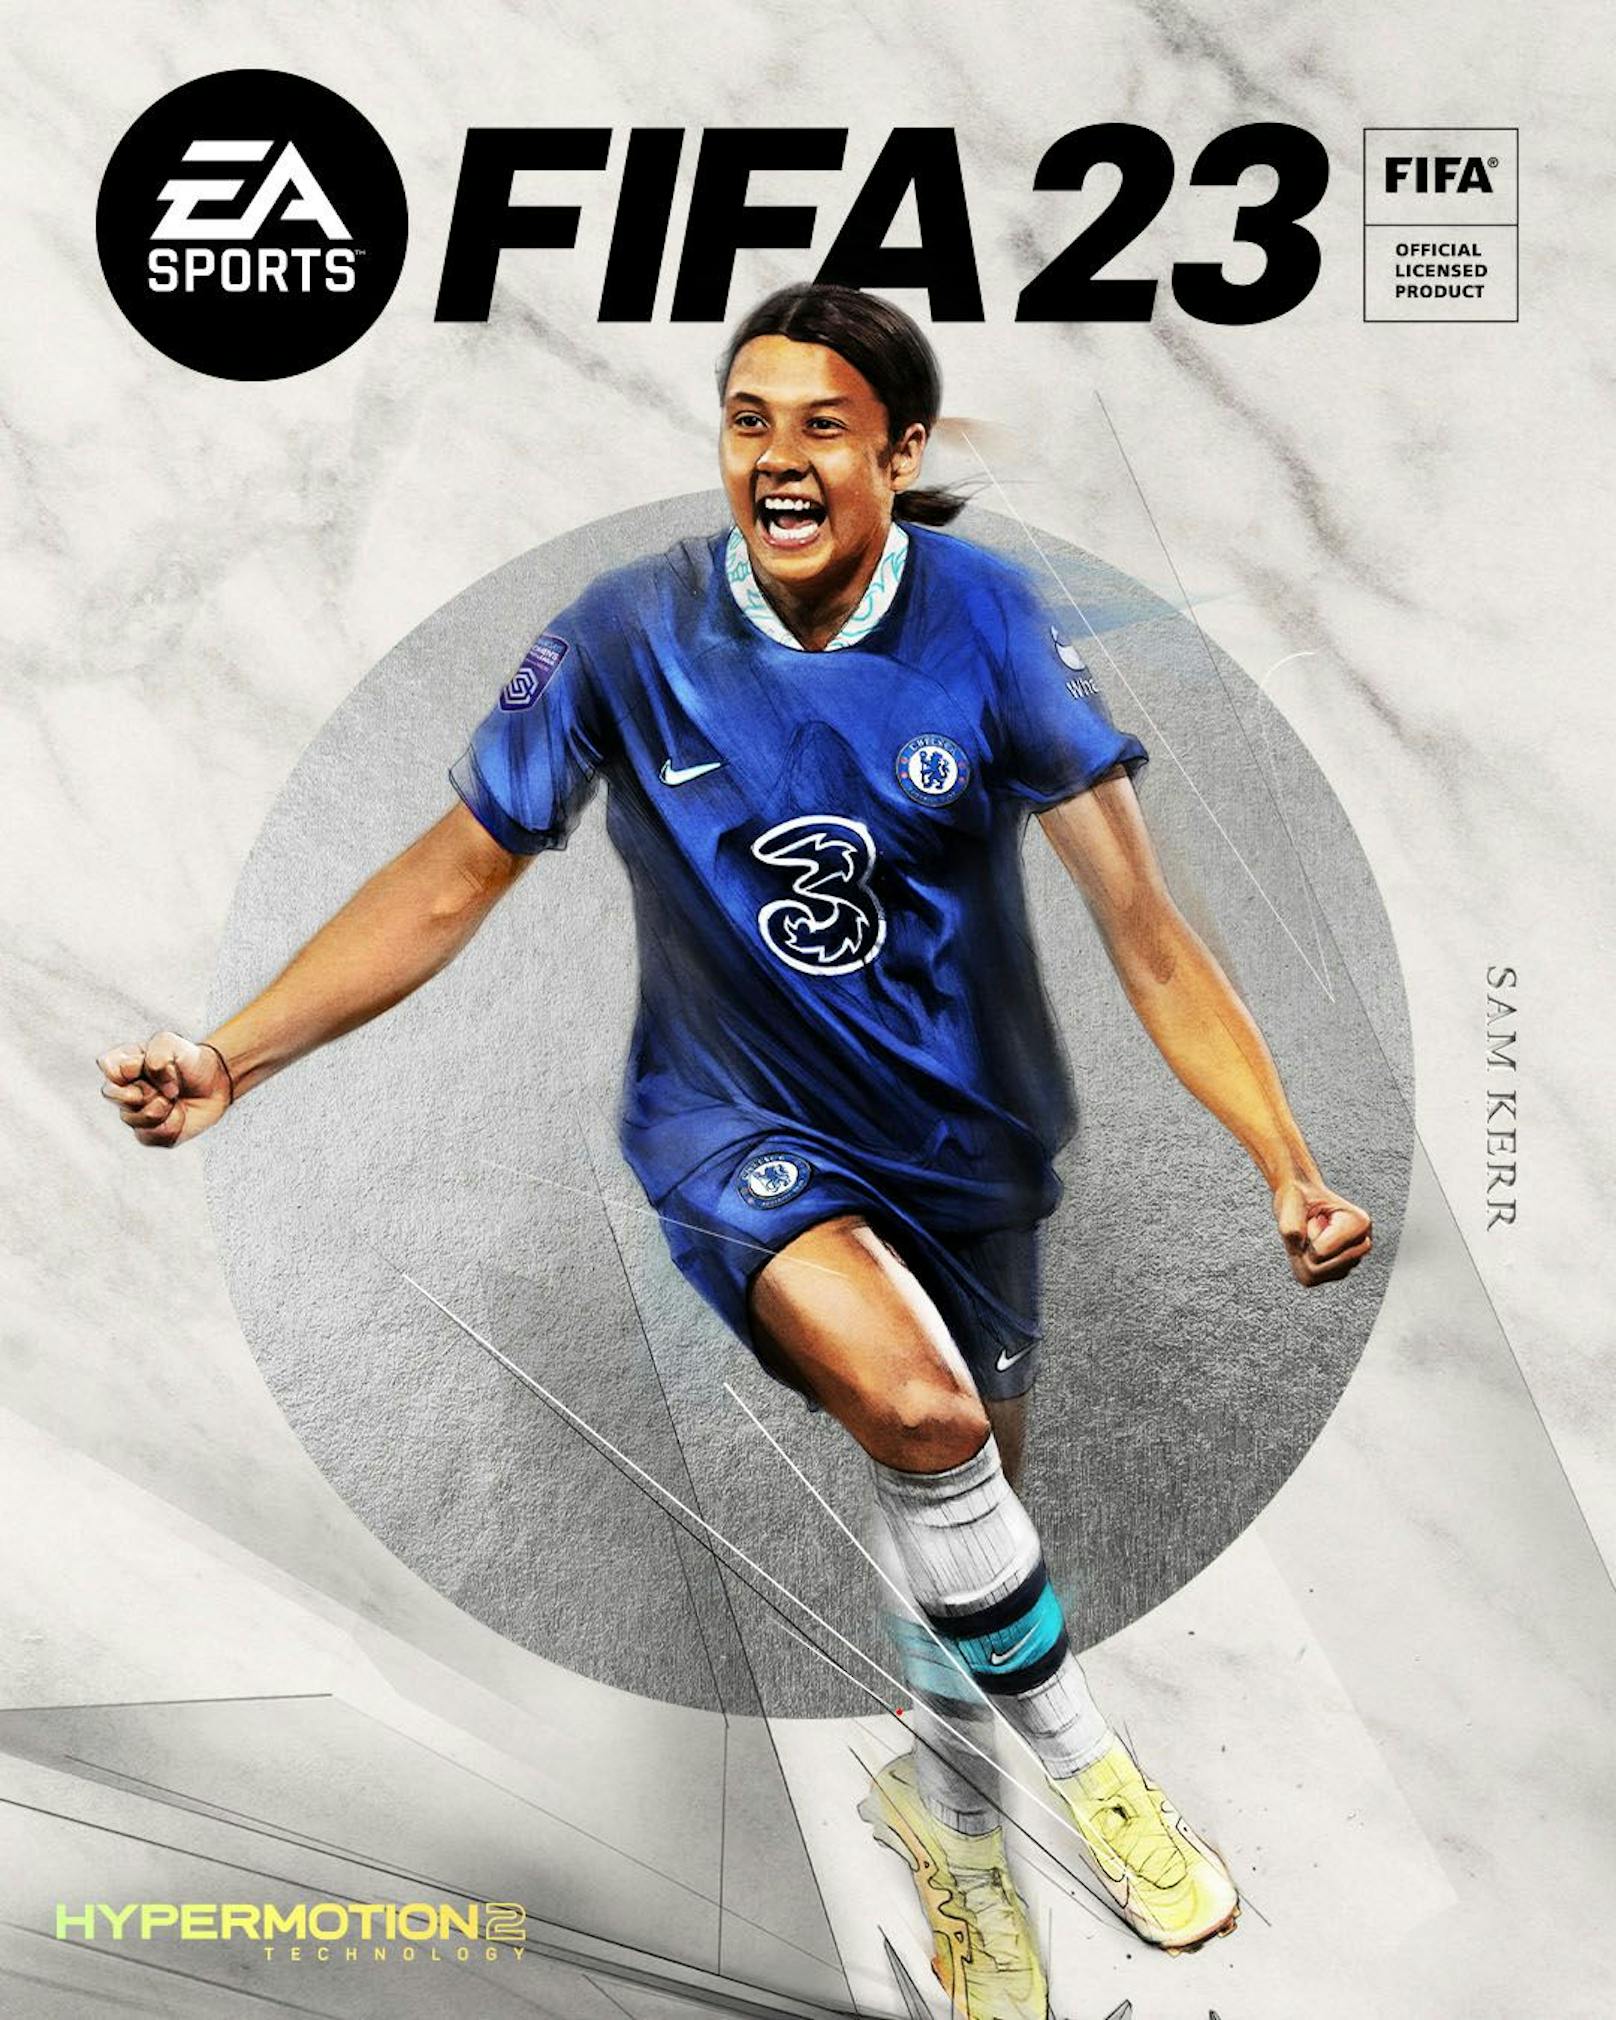 EA Sports enthüllt das Cover zu "FIFA 23" mit Kylian Mbappé und Sam Kerr (Bild).